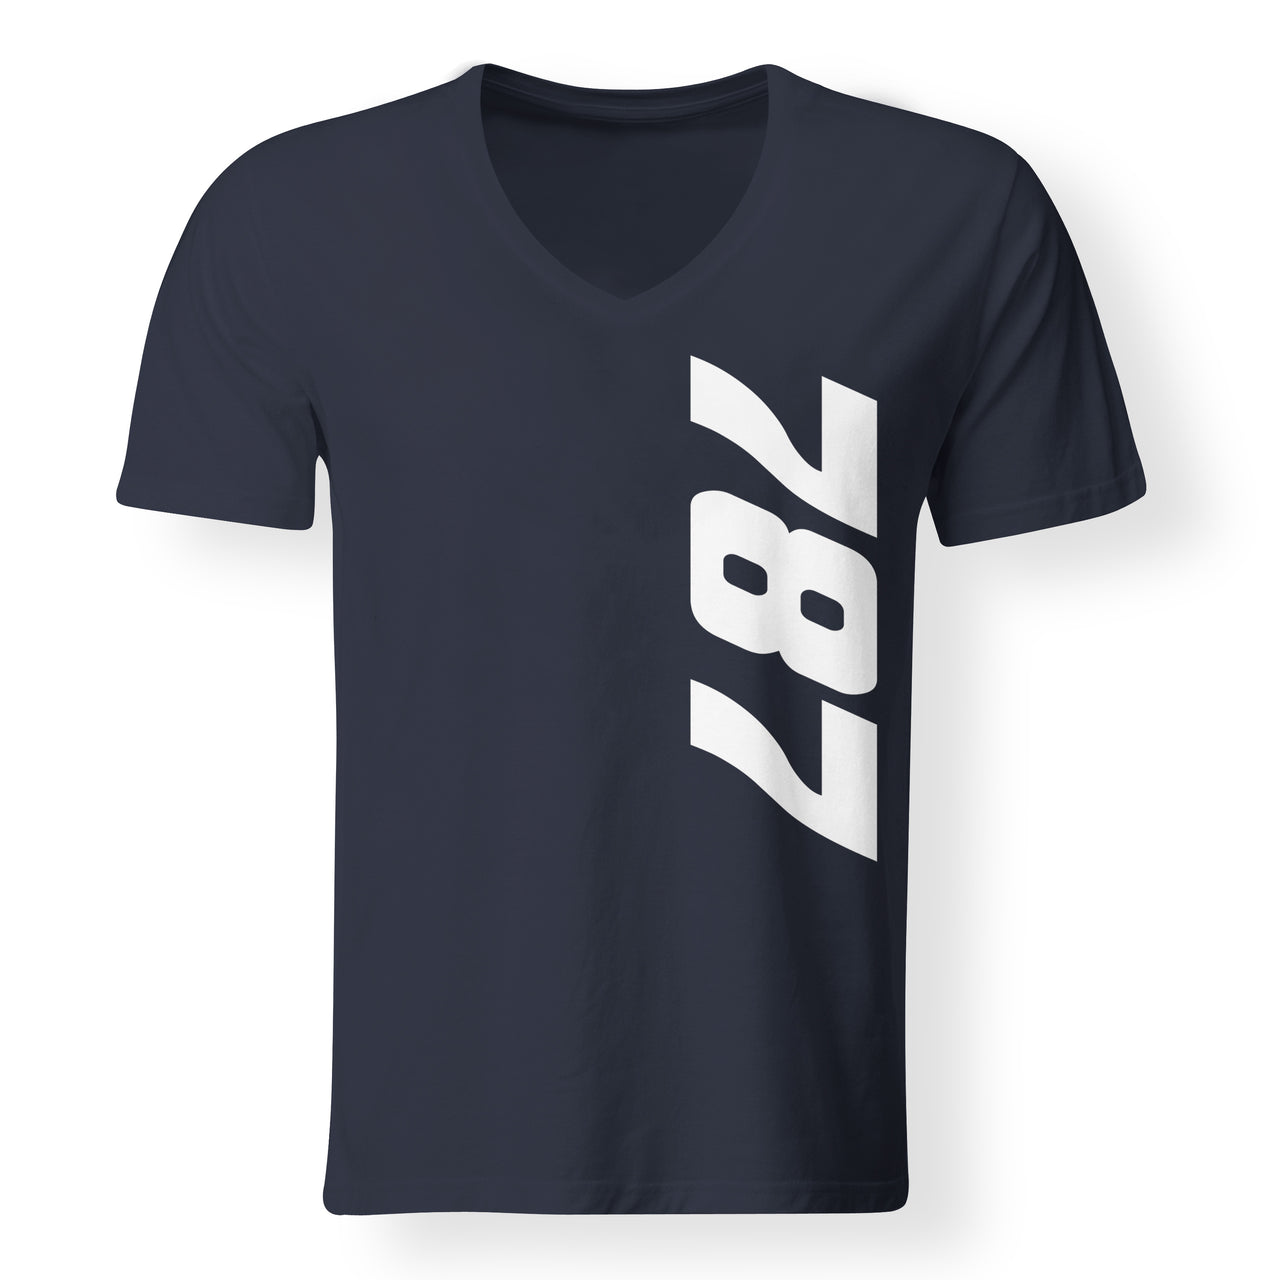 Boeing 787 Text Designed V-Neck T-Shirts